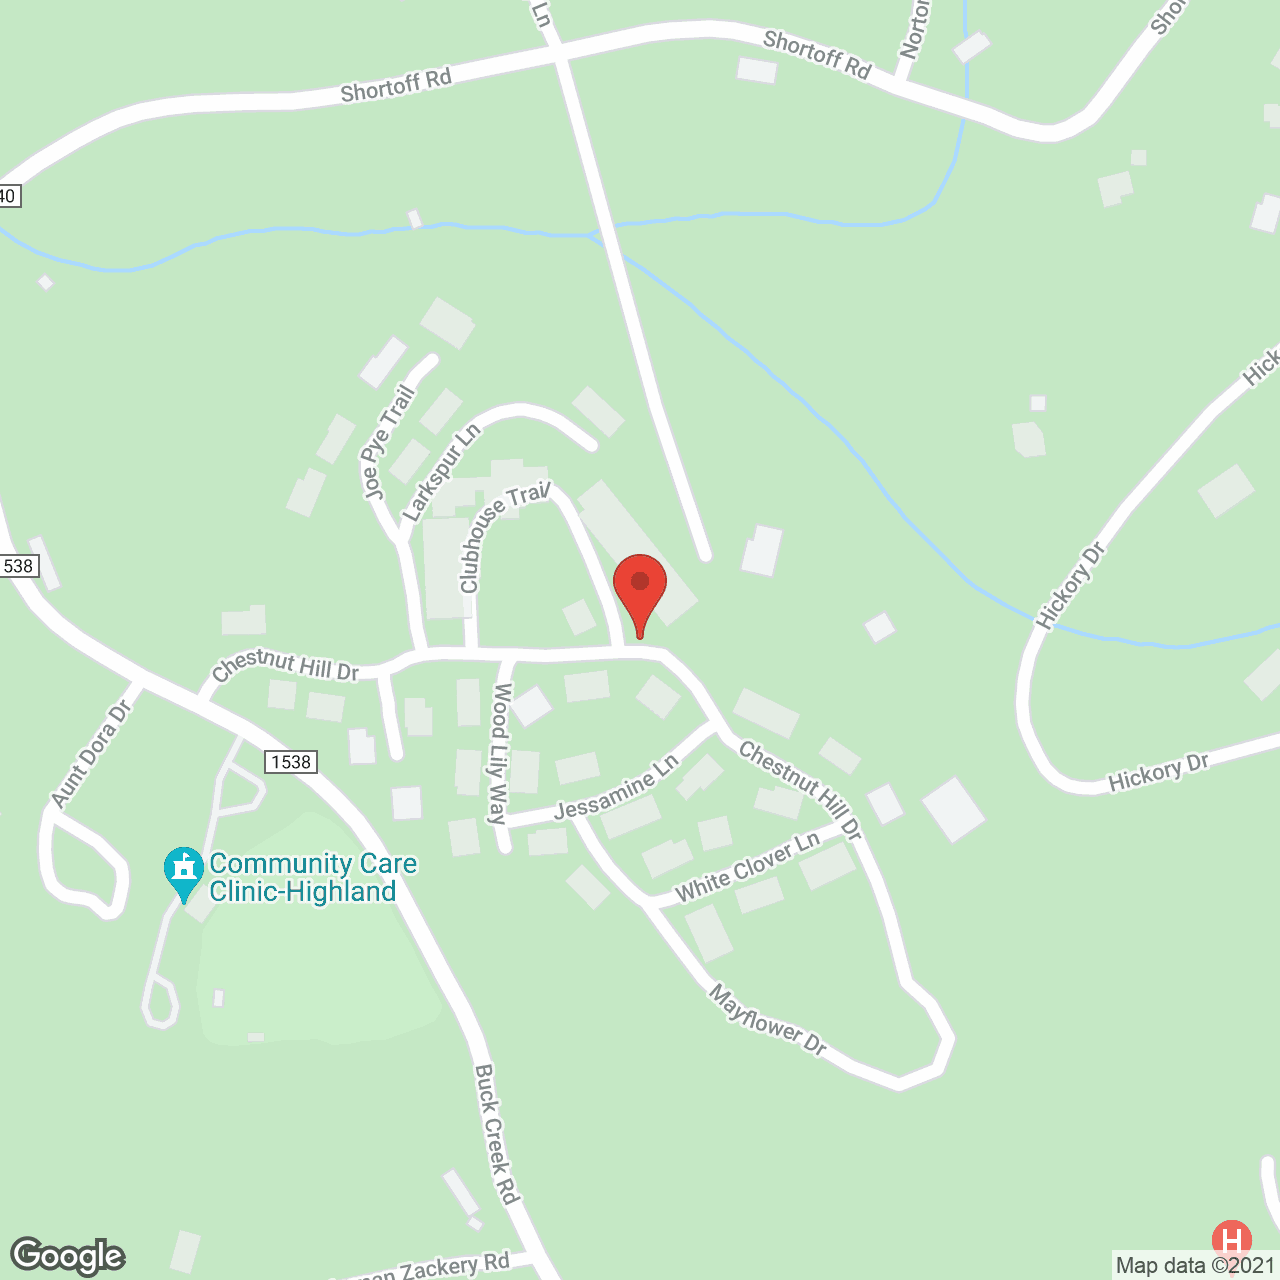 Chestnut Hill in google map